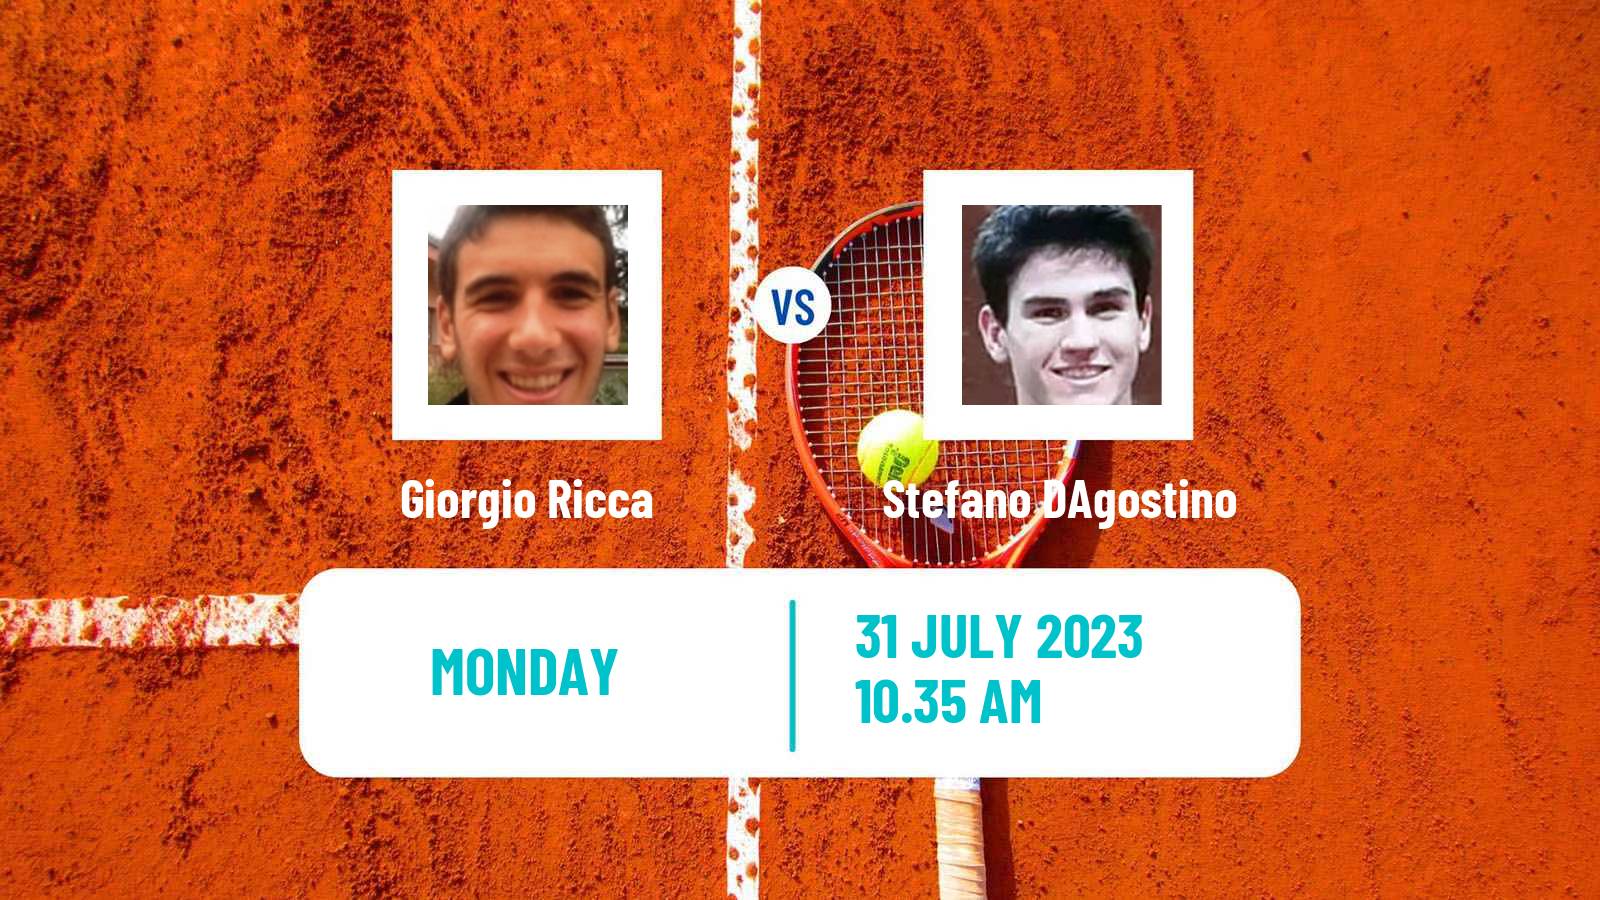 Tennis ITF M25 Bolzano Men Giorgio Ricca - Stefano DAgostino